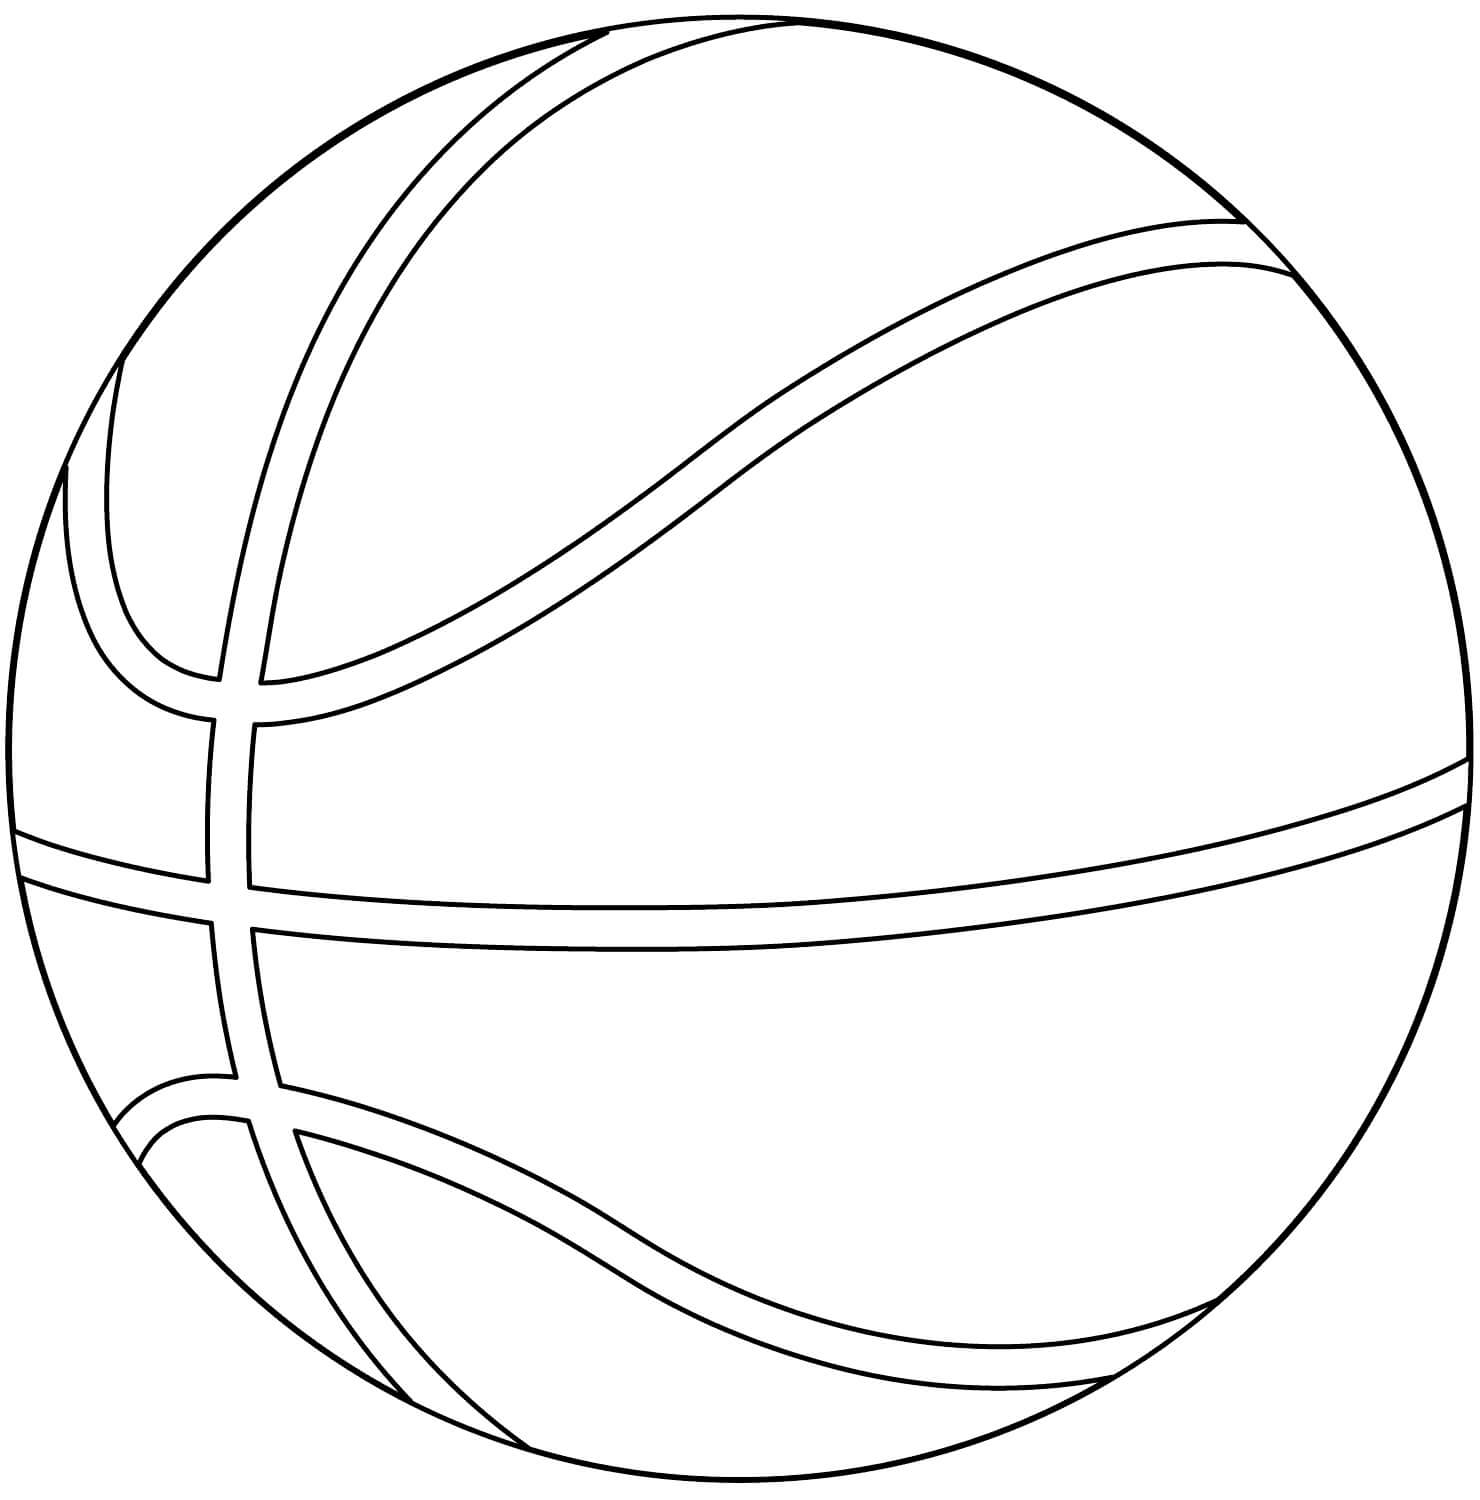 Baloncesto